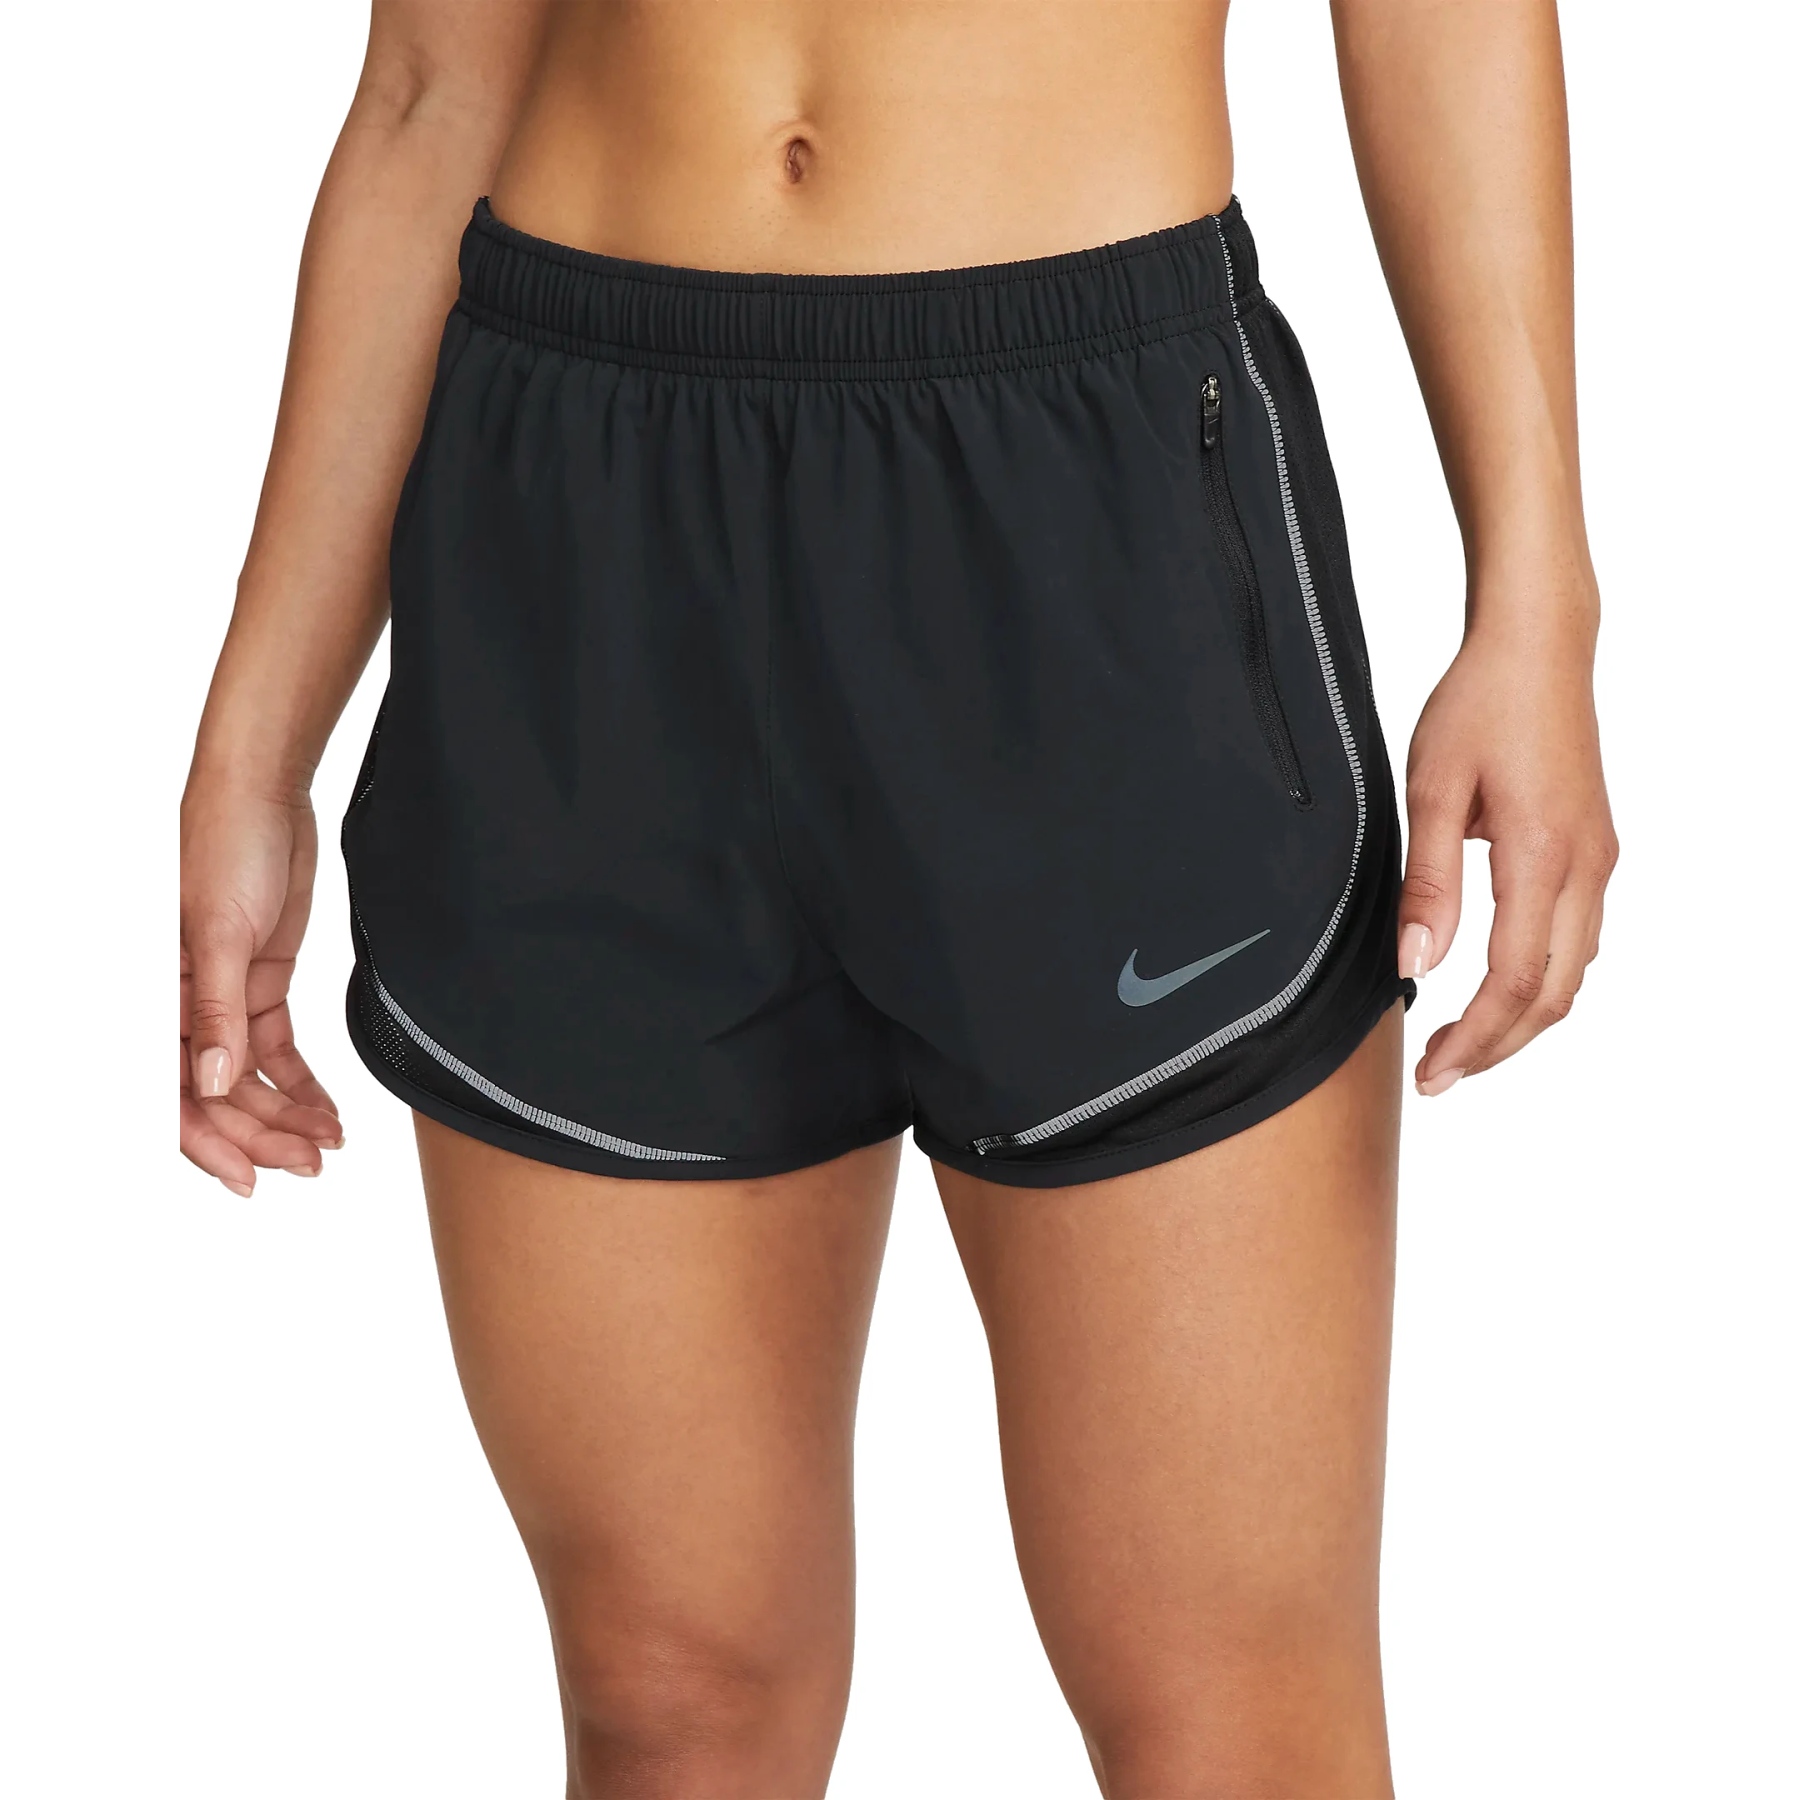 Nike Running Dri-FIT Race Tempo shorts in black